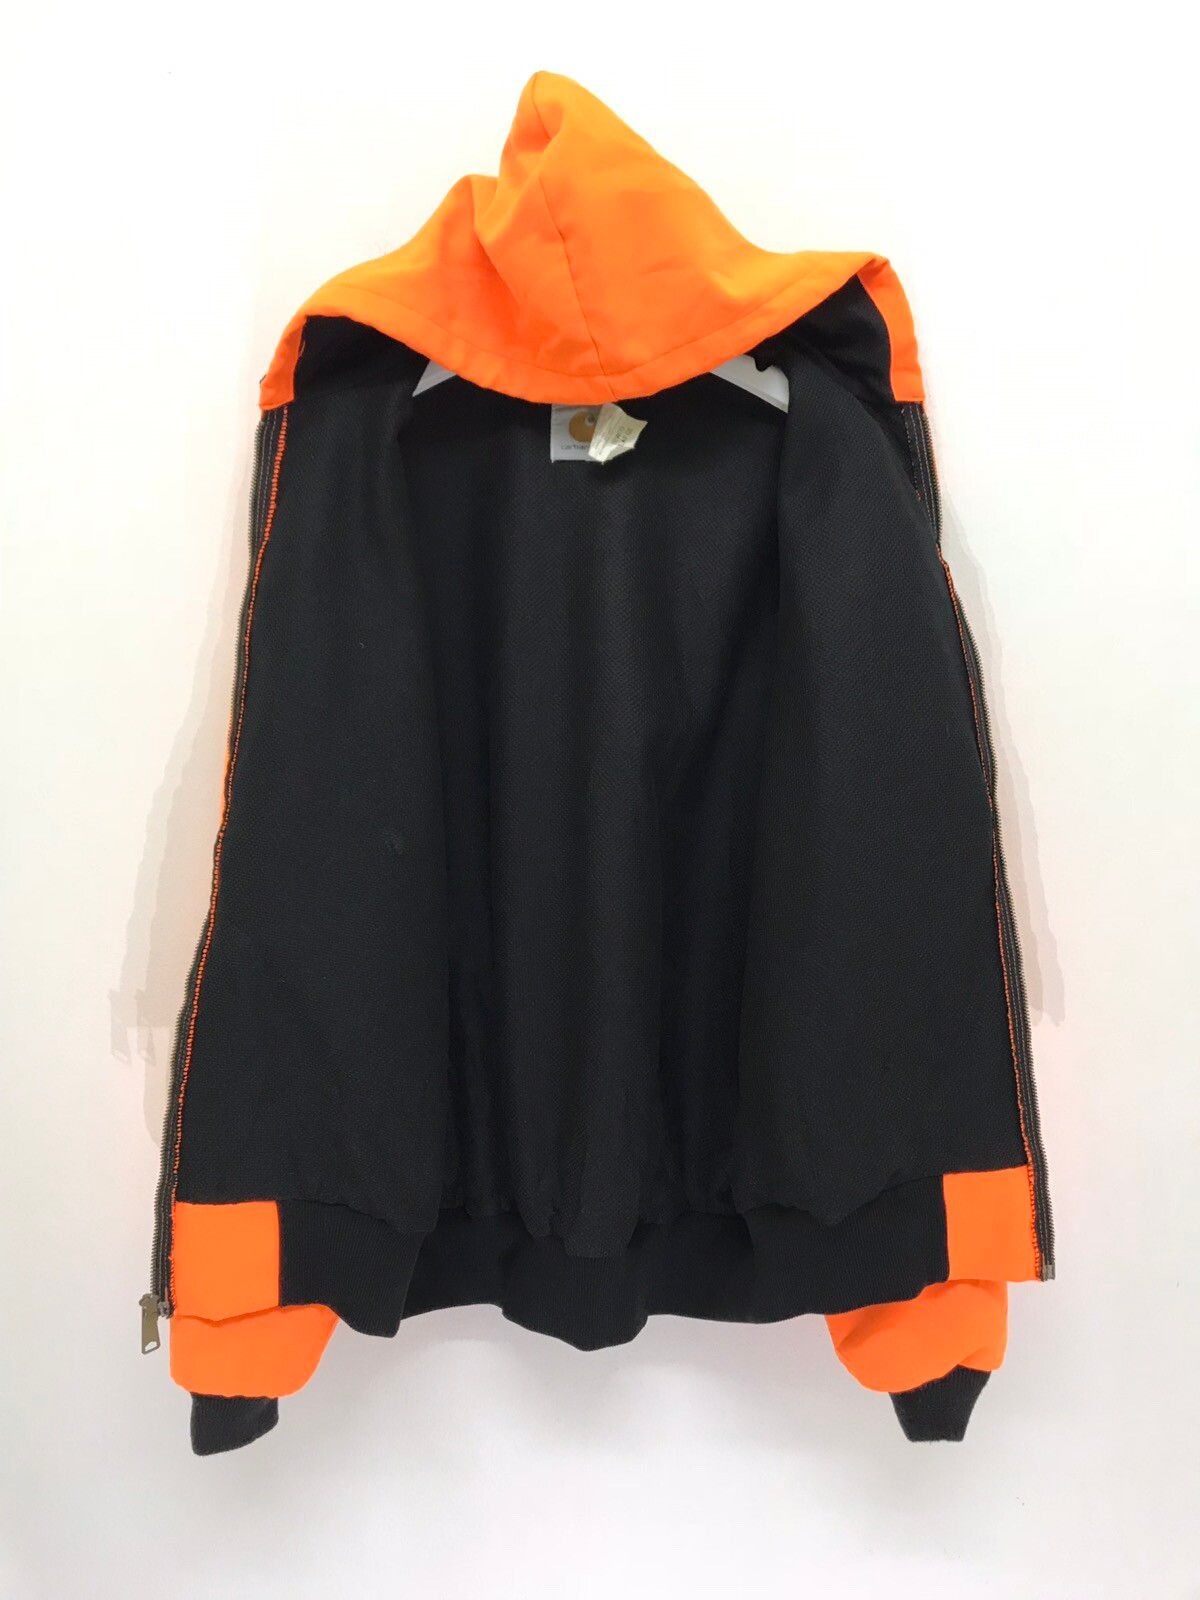 Carhartt Made in USA Carhartt Jacket Neon Orange Very Bright Colour Size US XL / EU 56 / 4 - 5 Thumbnail